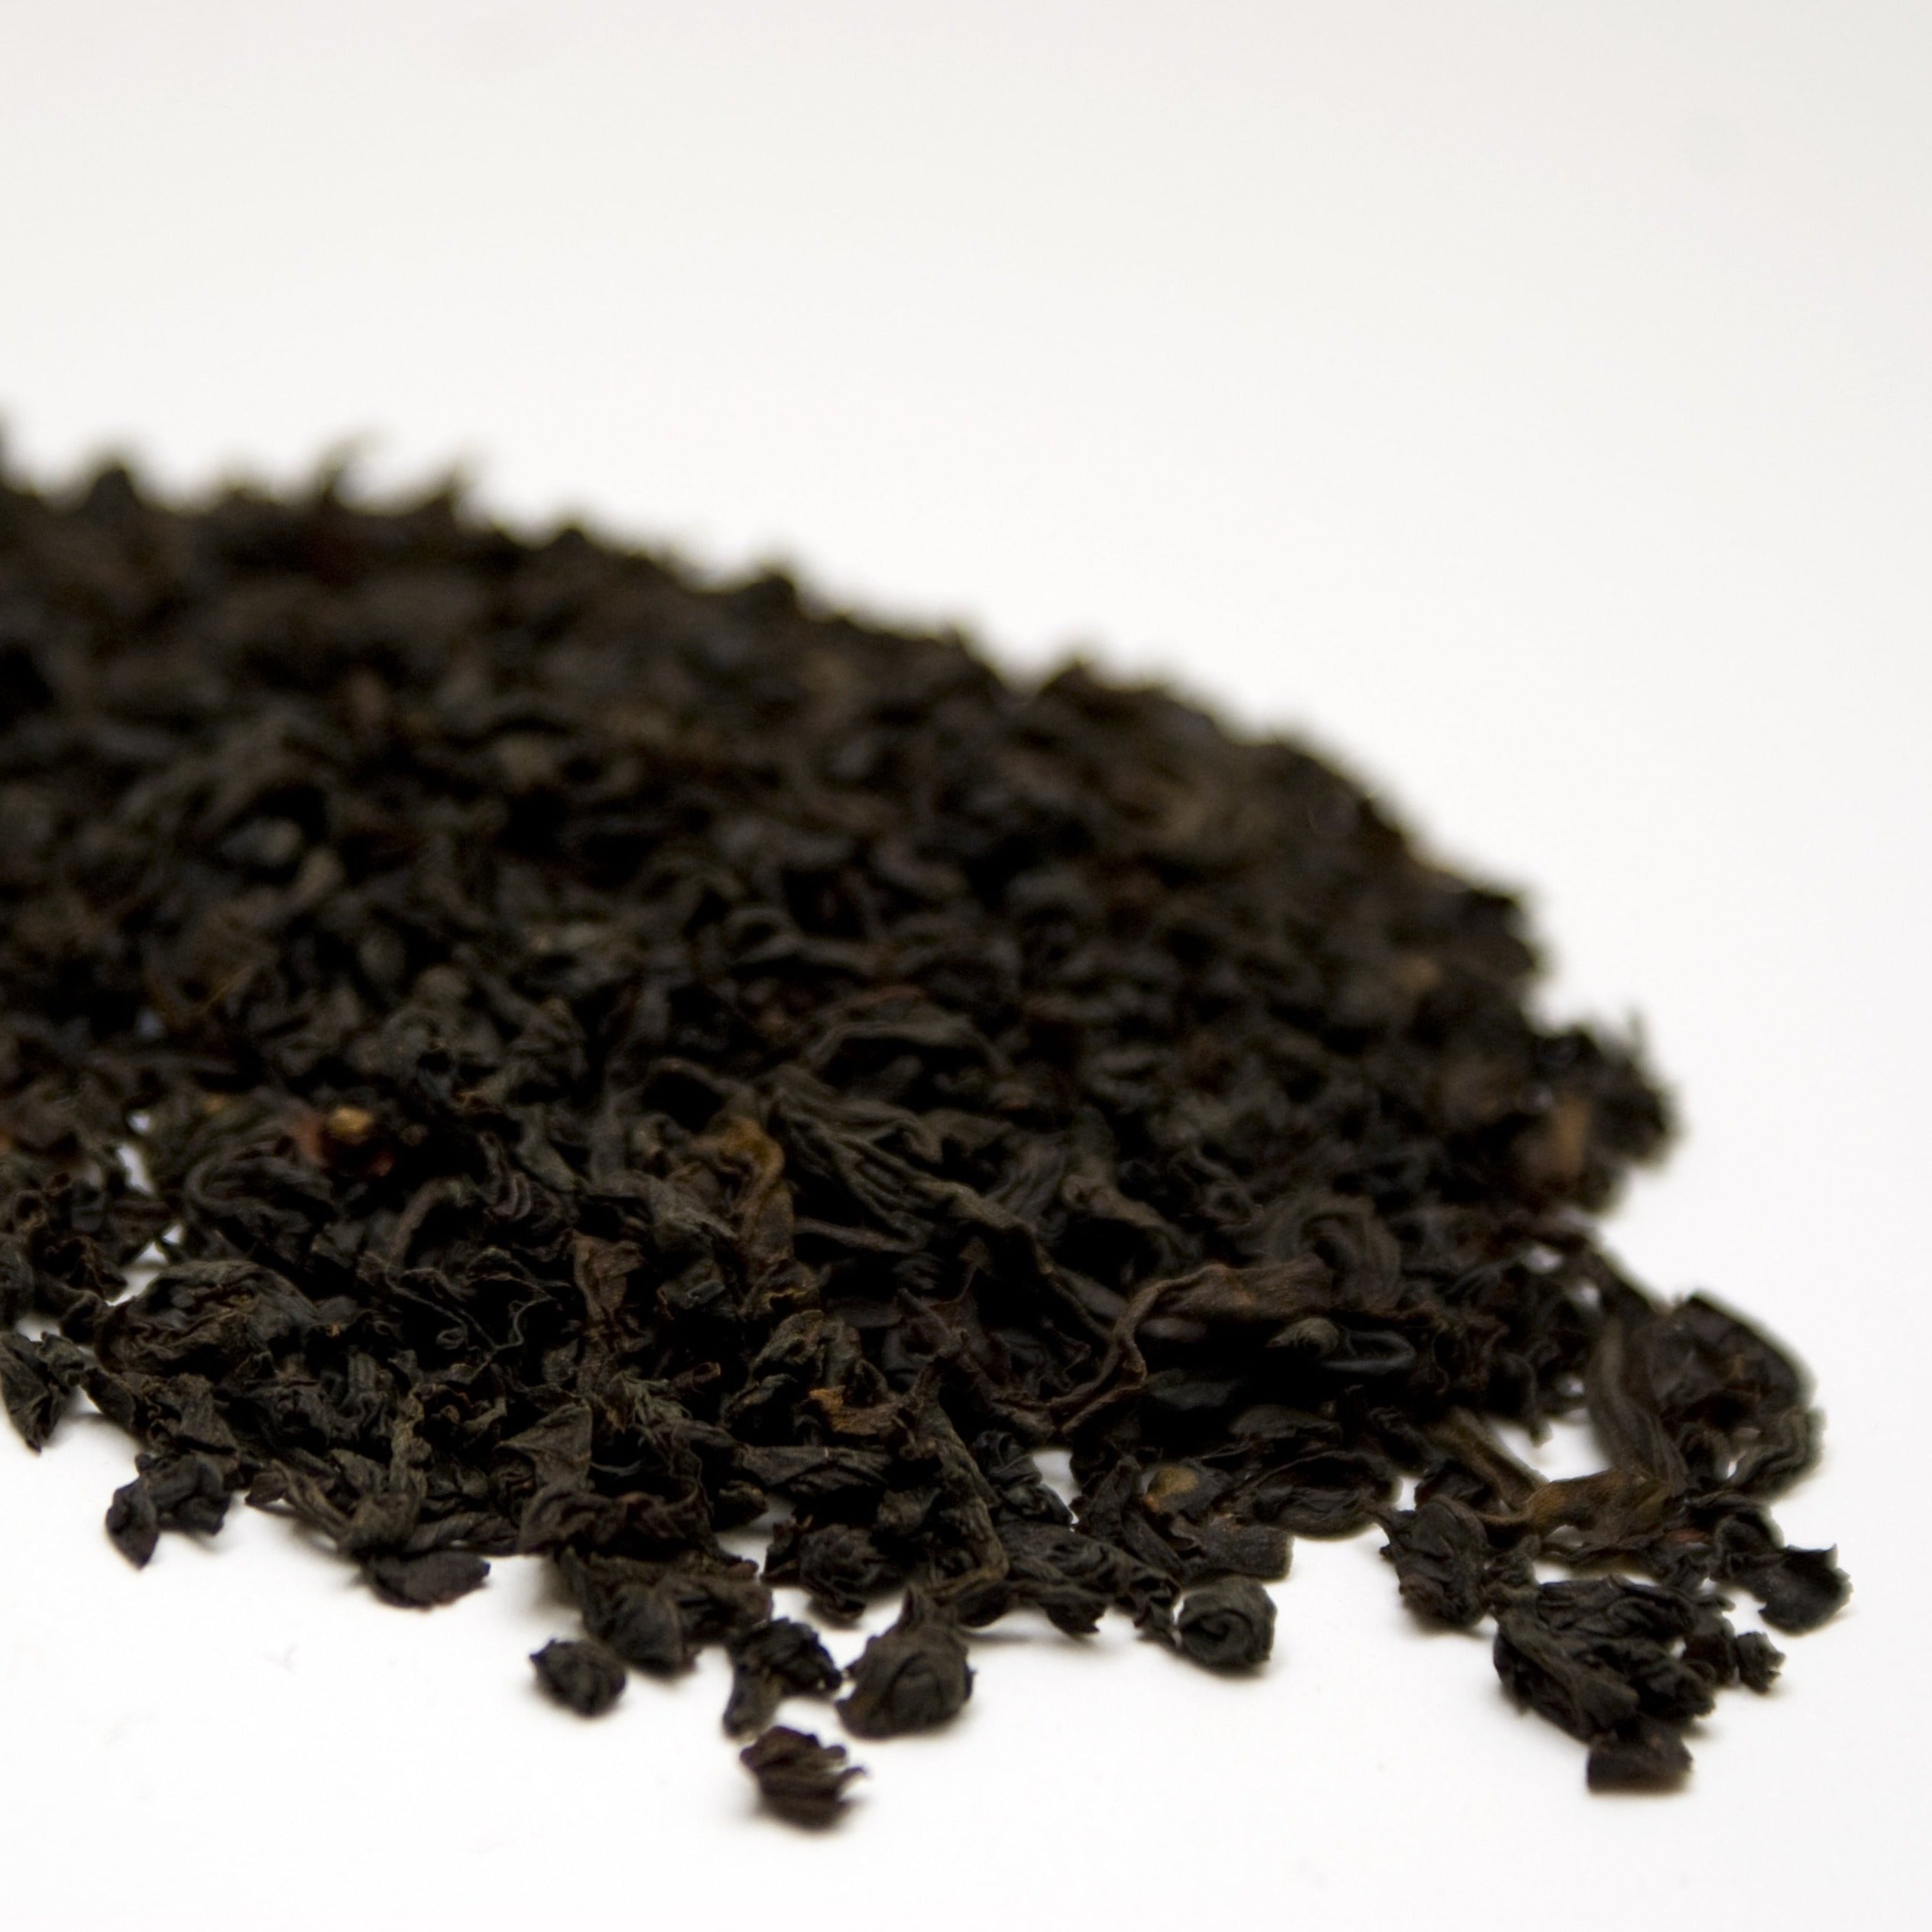 Organic Traditional Unsorted Black Tea